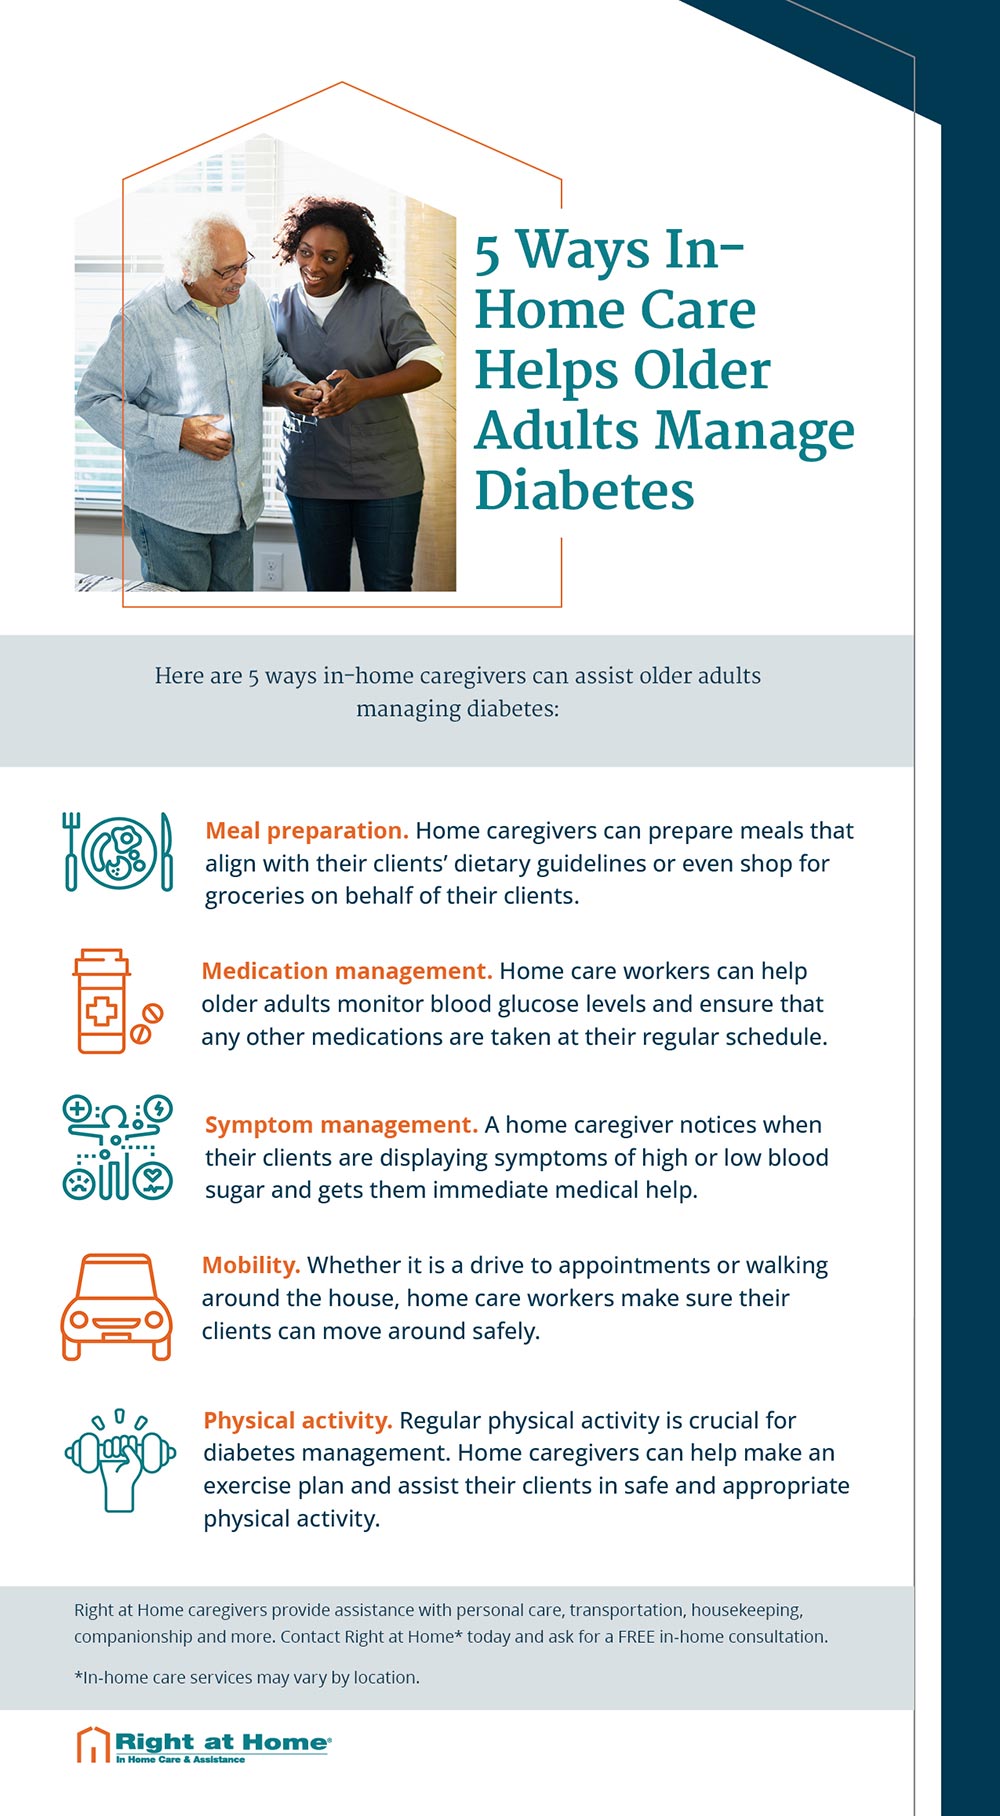 5-ways-in-home-care-benefits-diabetics-infographic